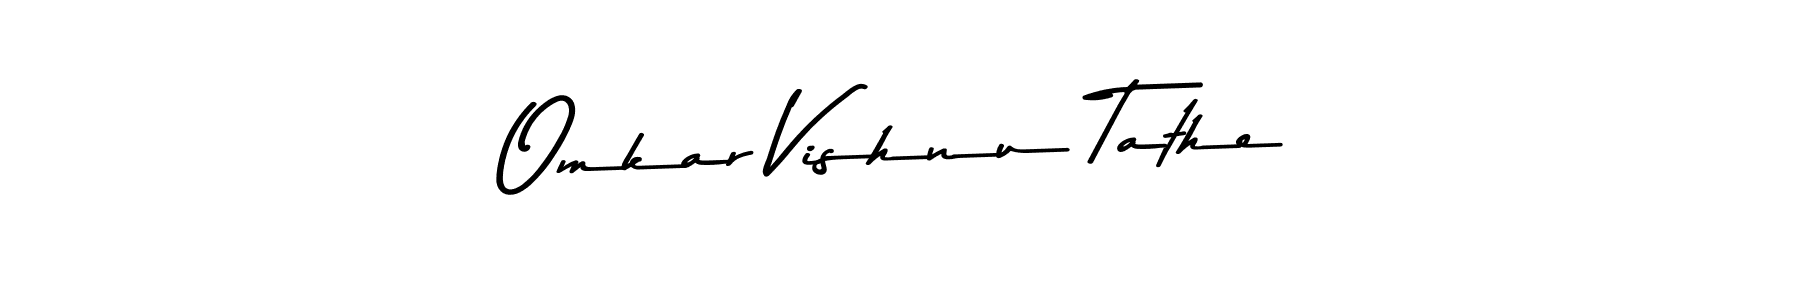 How to Draw Omkar Vishnu Tathe signature style? Asem Kandis PERSONAL USE is a latest design signature styles for name Omkar Vishnu Tathe. Omkar Vishnu Tathe signature style 9 images and pictures png